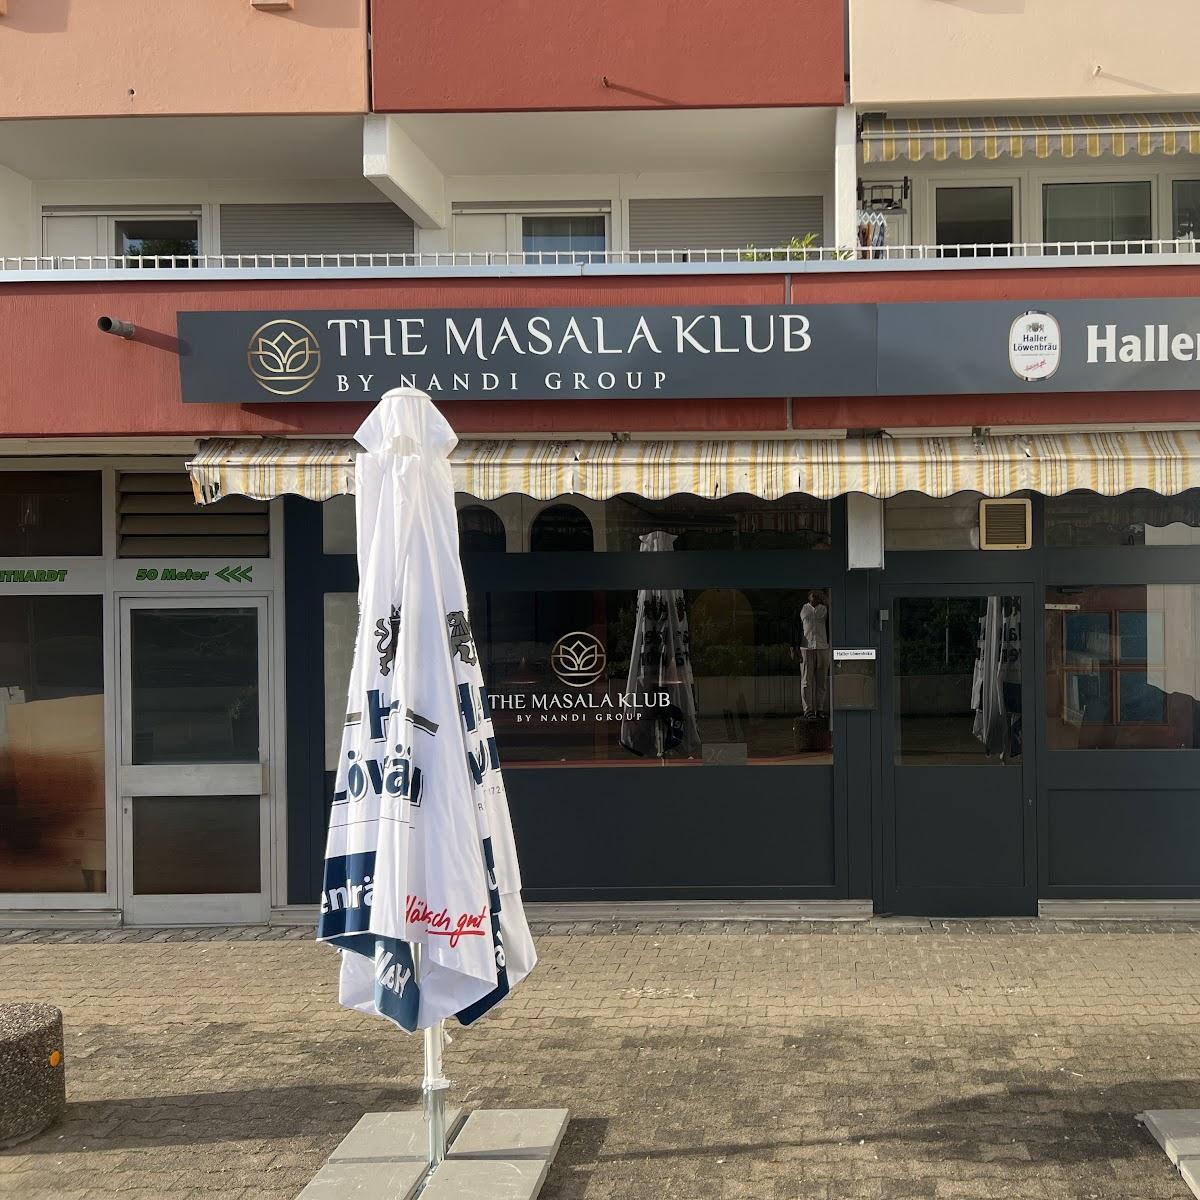 Restaurant "The Masala Klub" in Kornwestheim